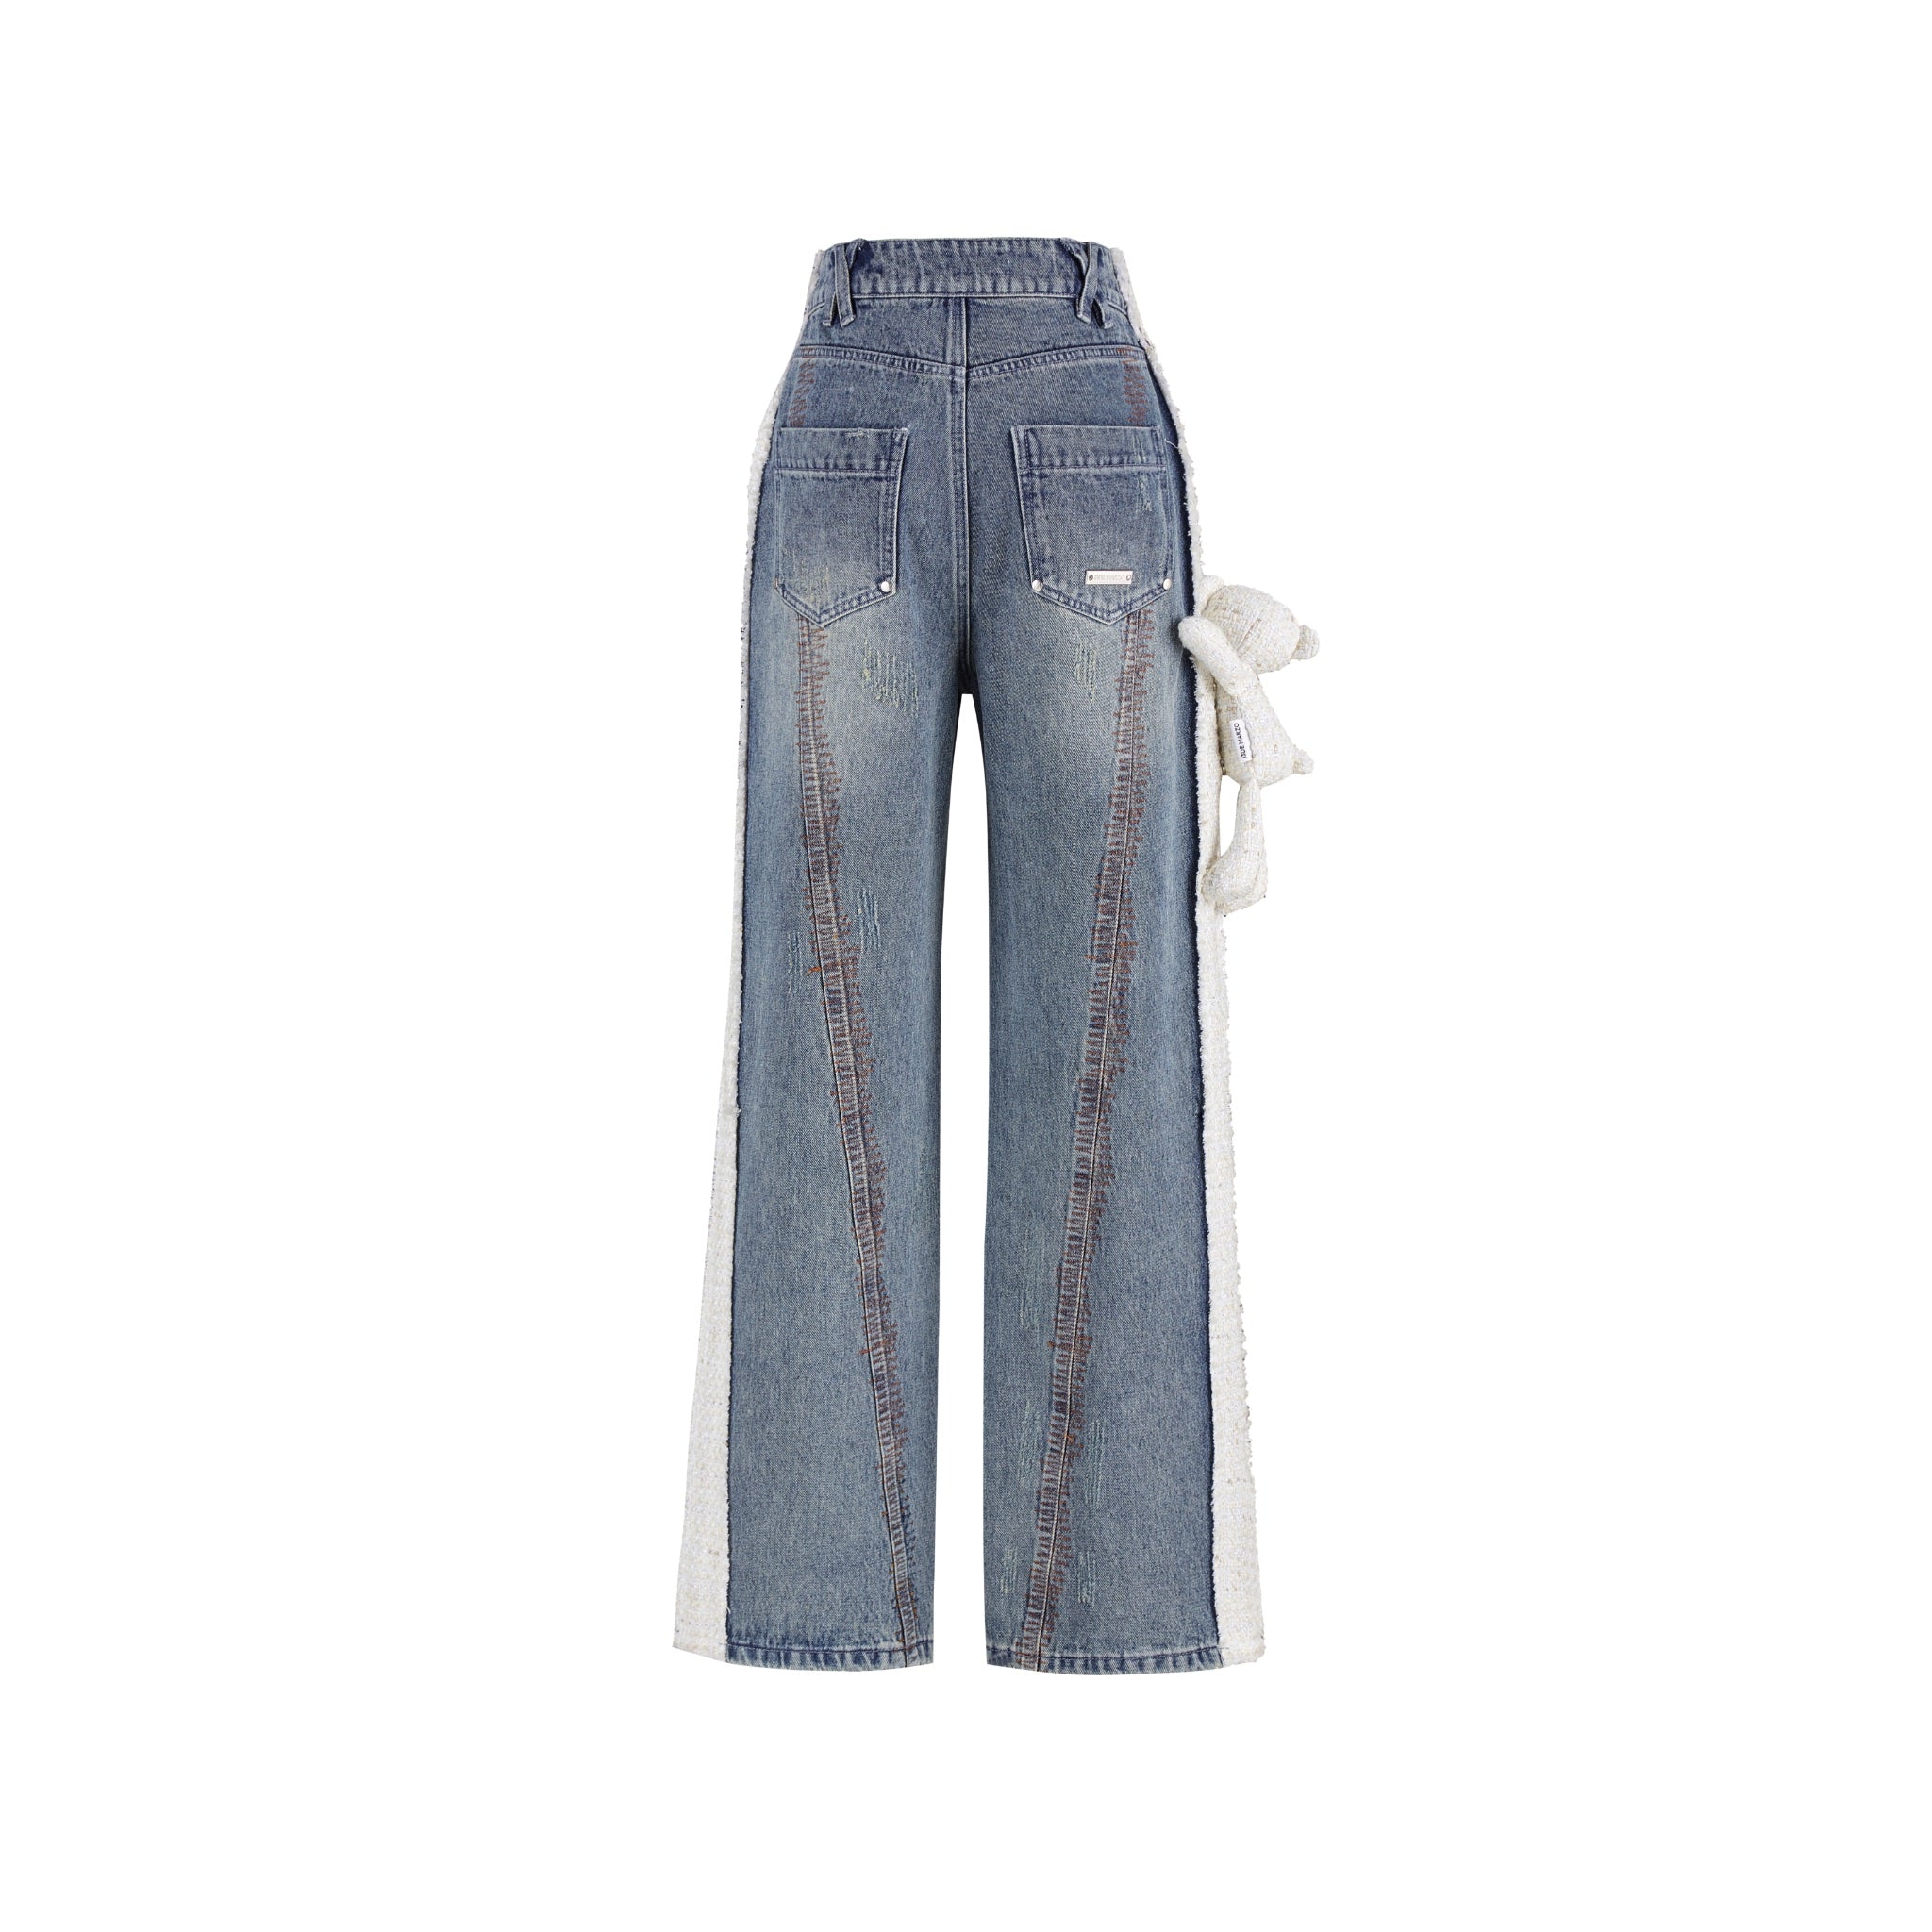 WRITEONTHESAND | Denim jeans fashion, Vintage denim jeans, Denim jeans men